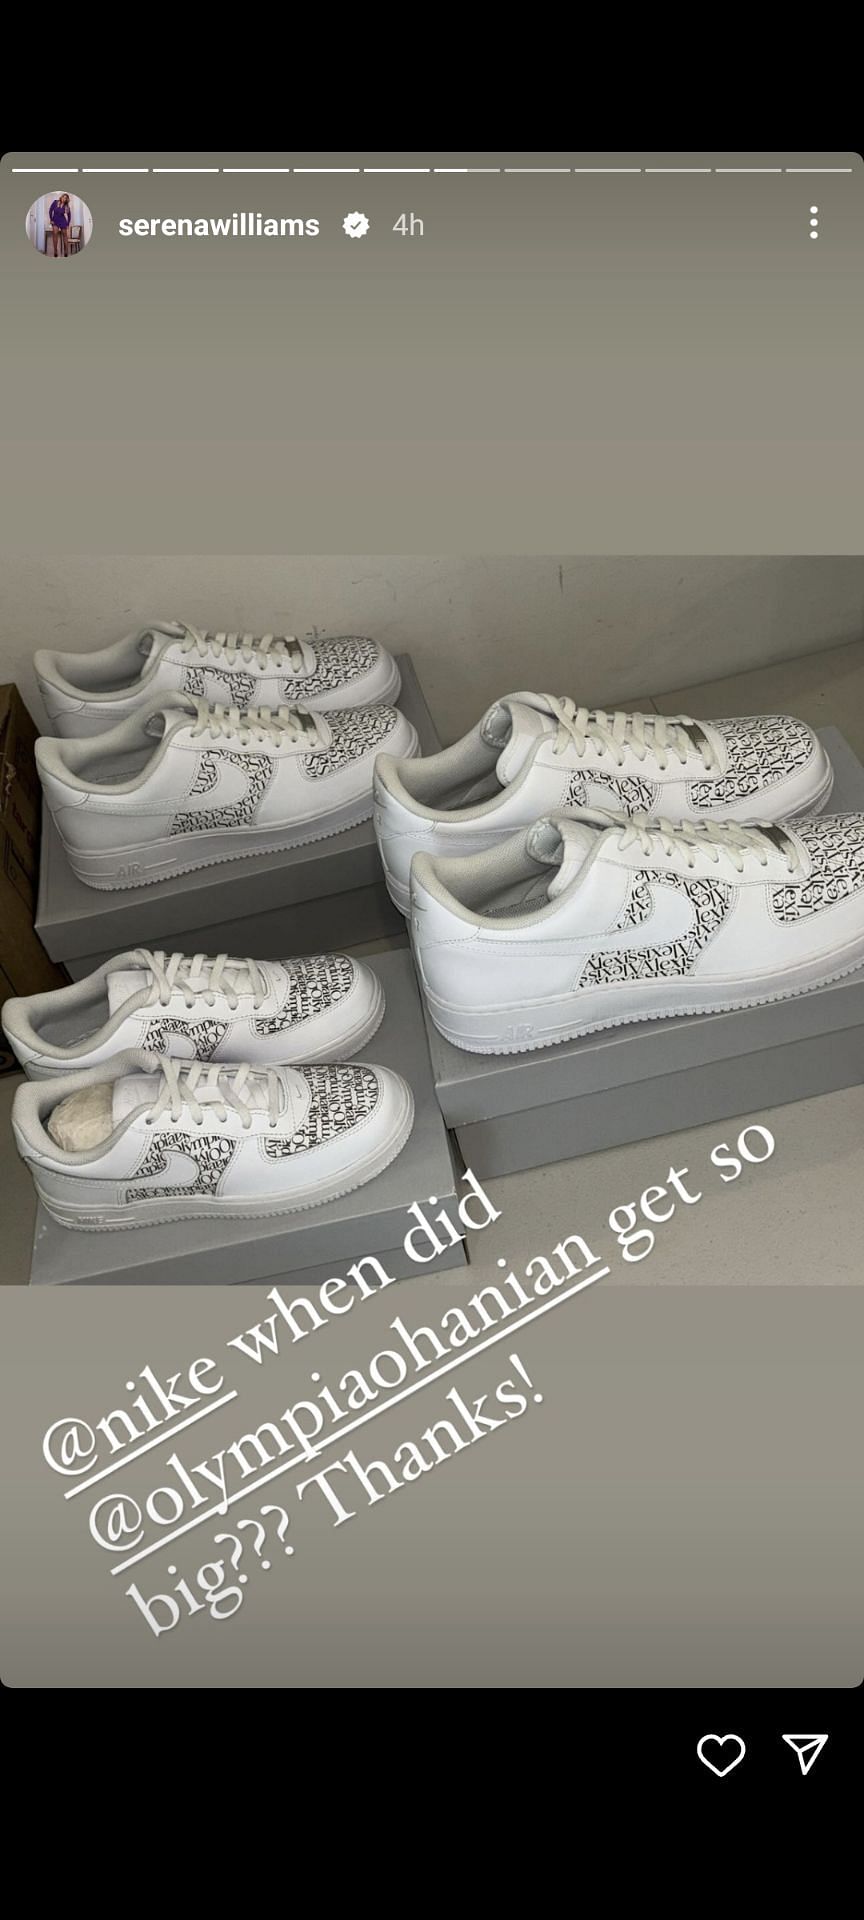 Custom-made Nike shoes for Serena Williams, Alexis Ohanian and Olympia Ohanian